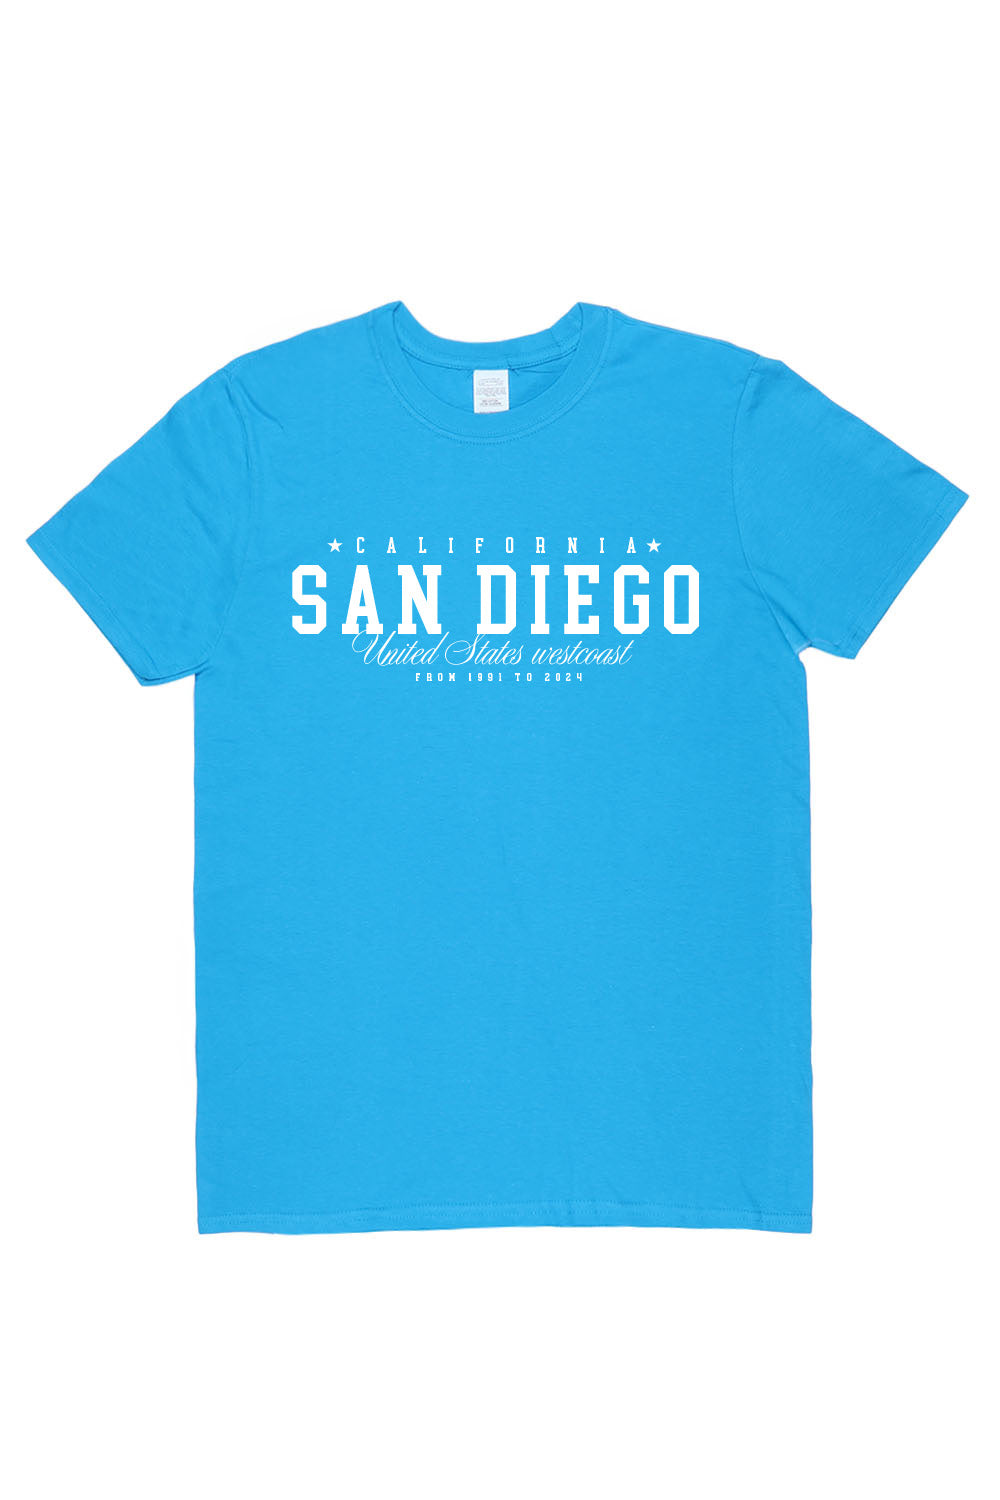 San Diego T-Shirt in Sapphire Blue (Custom Packs)